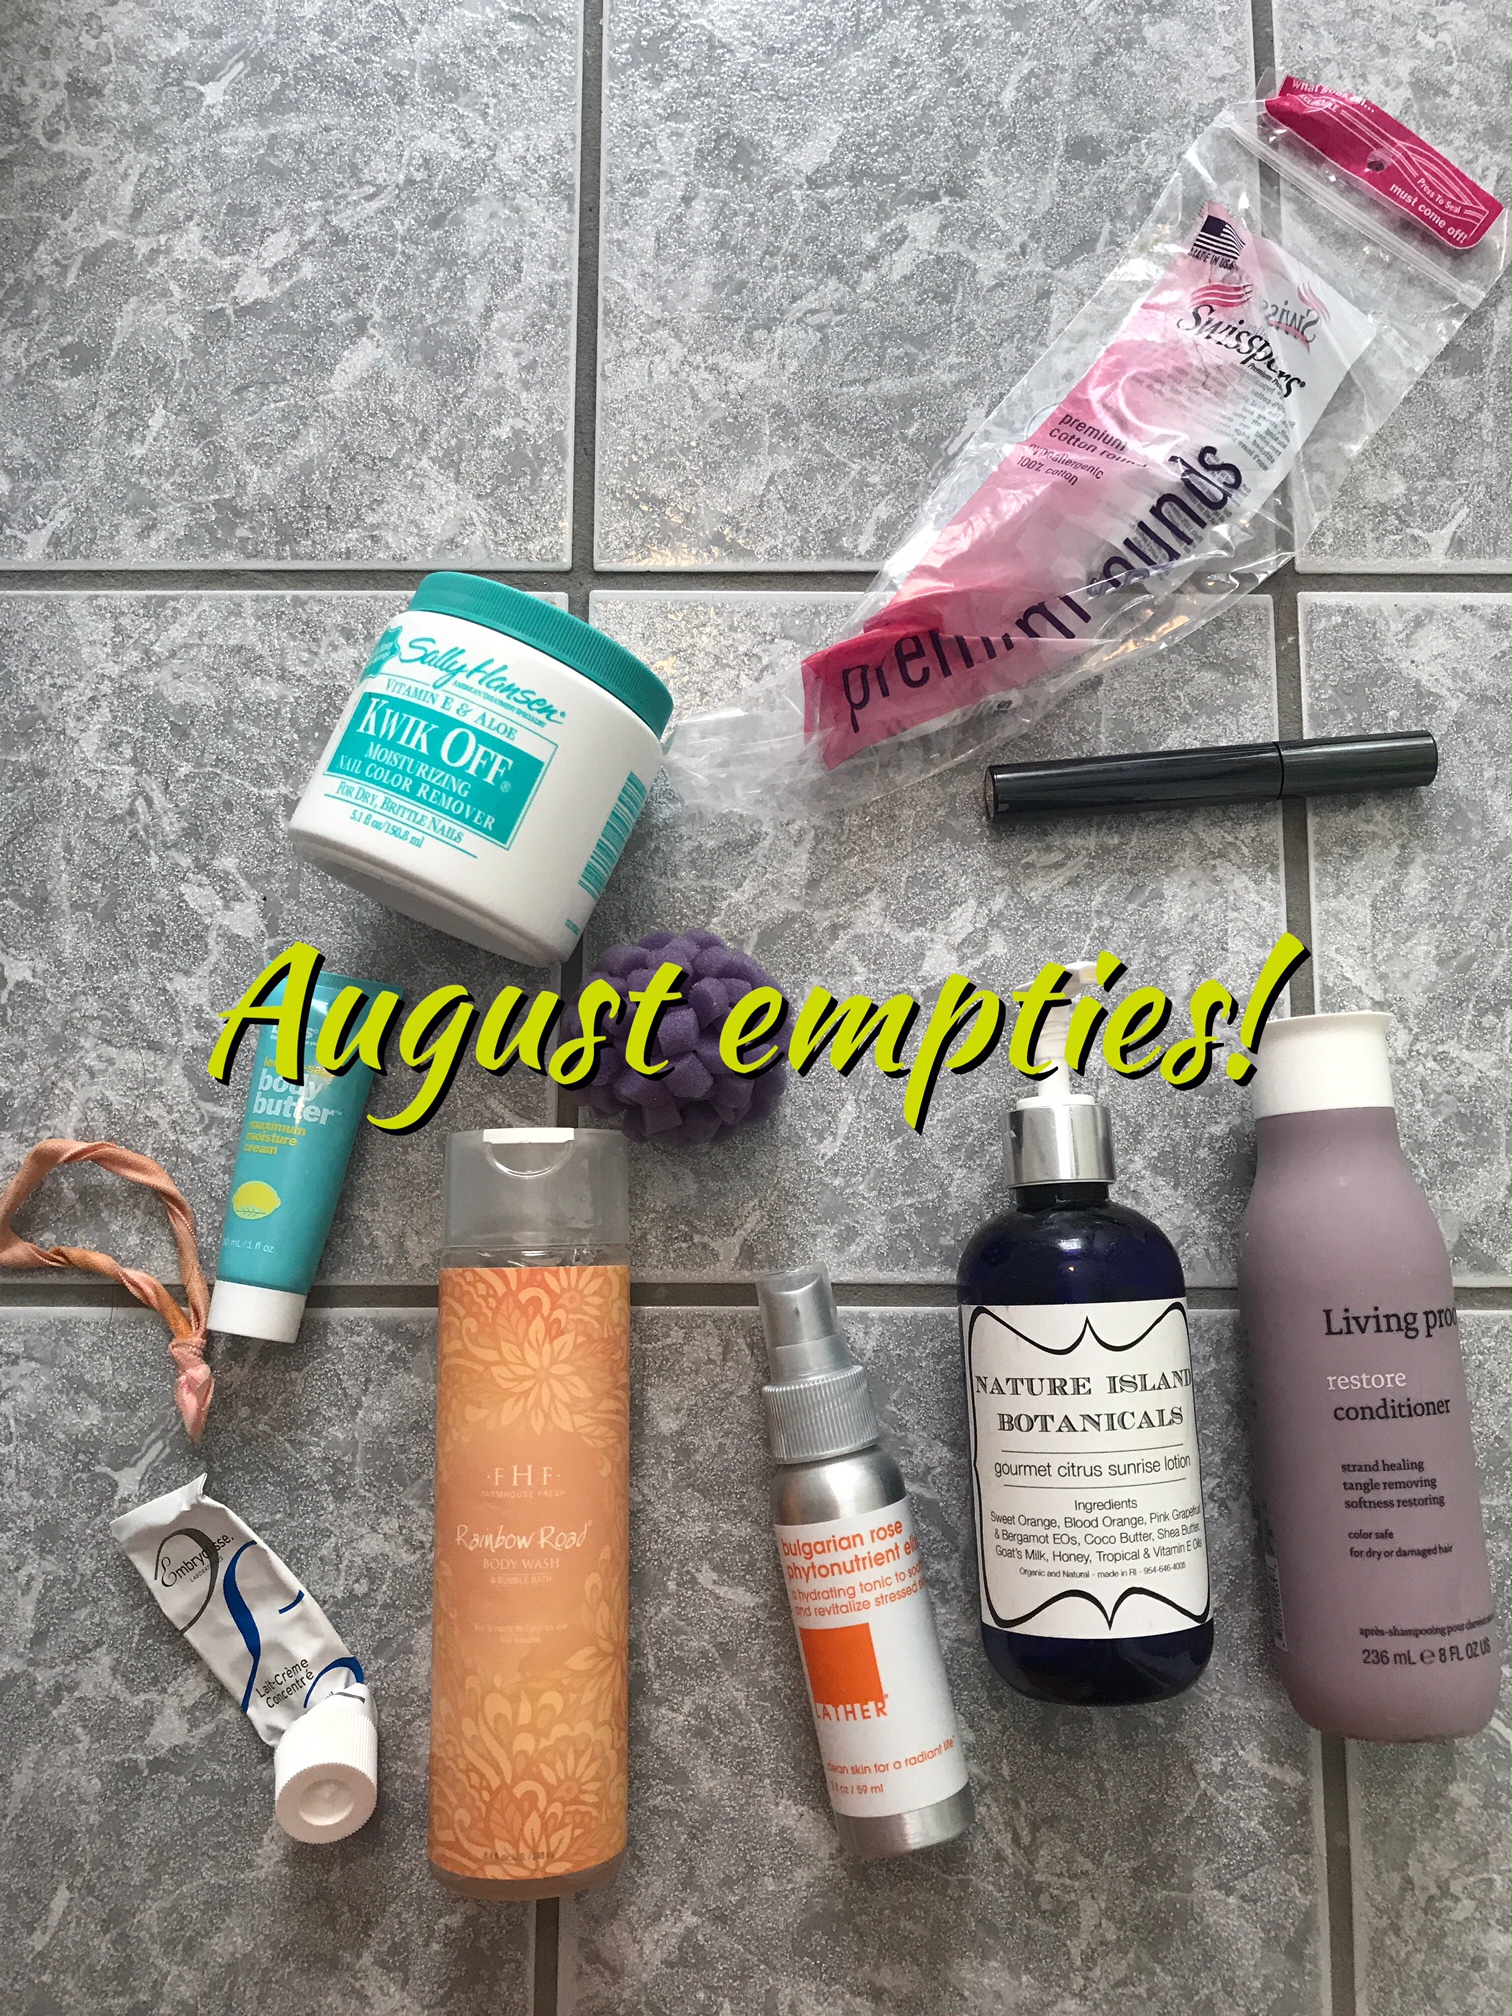 beauty empties for August 2017, neversaydiebeauty.com